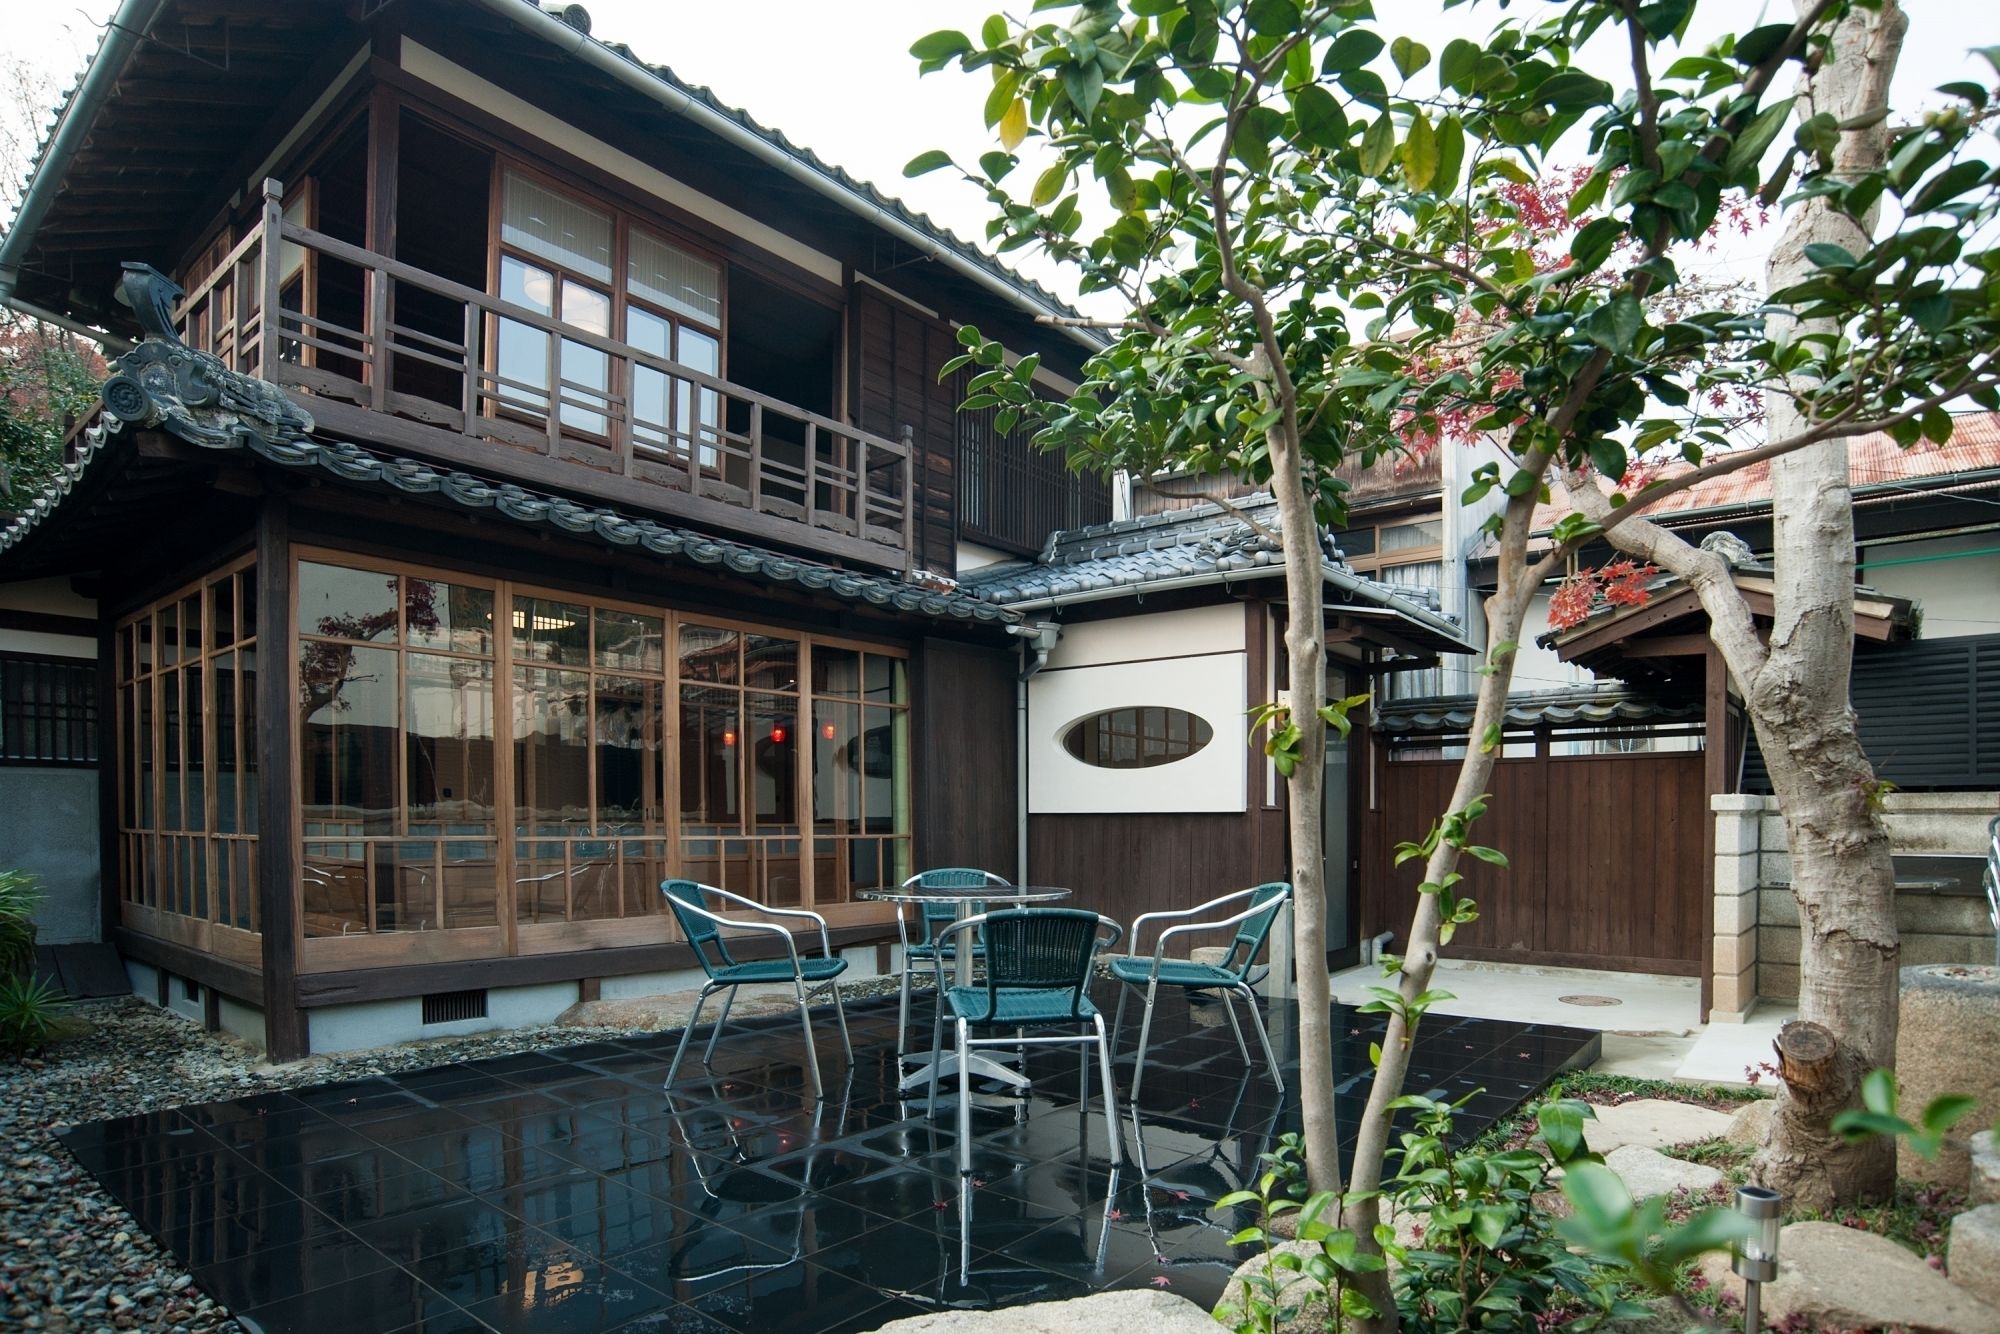 moons cafe　長江道沿いの古民家一棟貸しの宿。